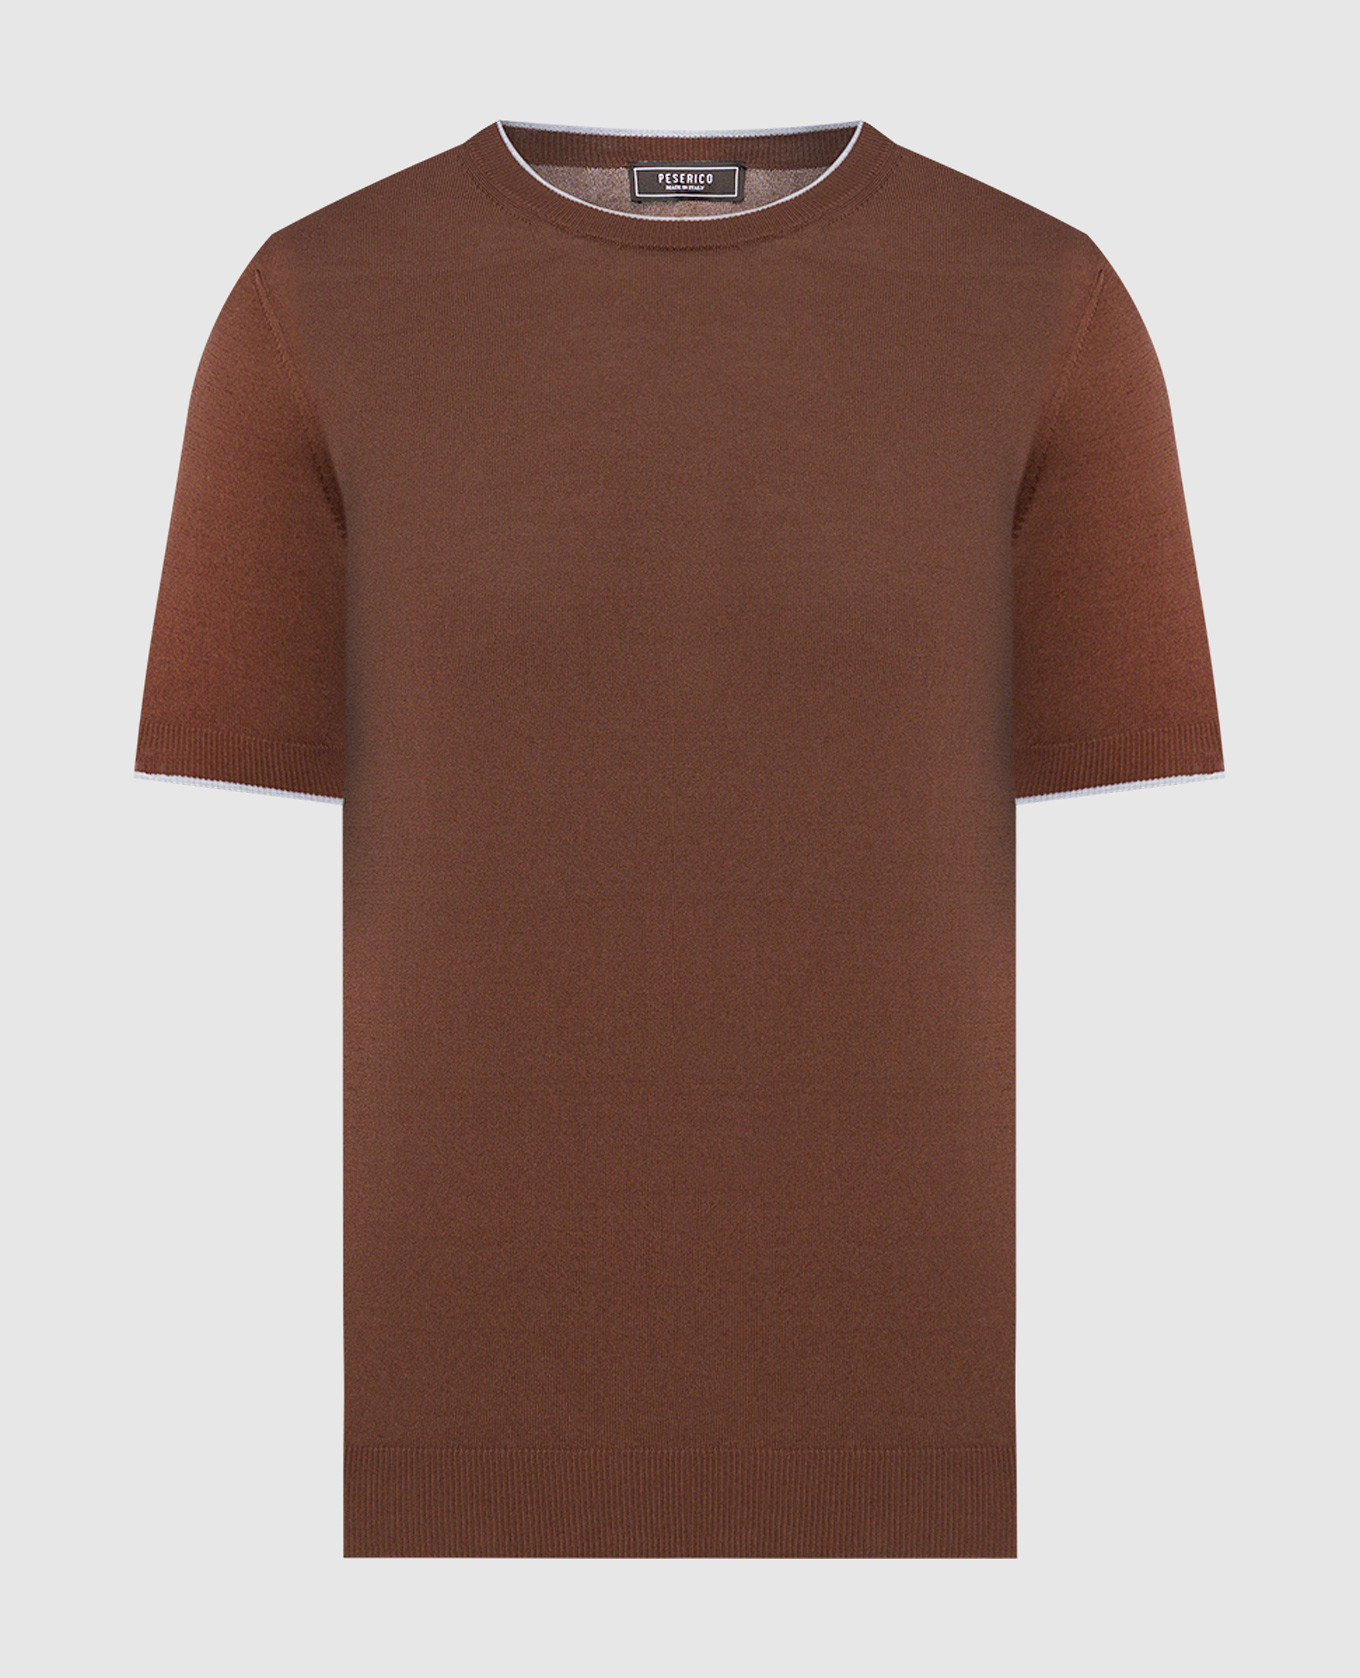 Brown T-shirt